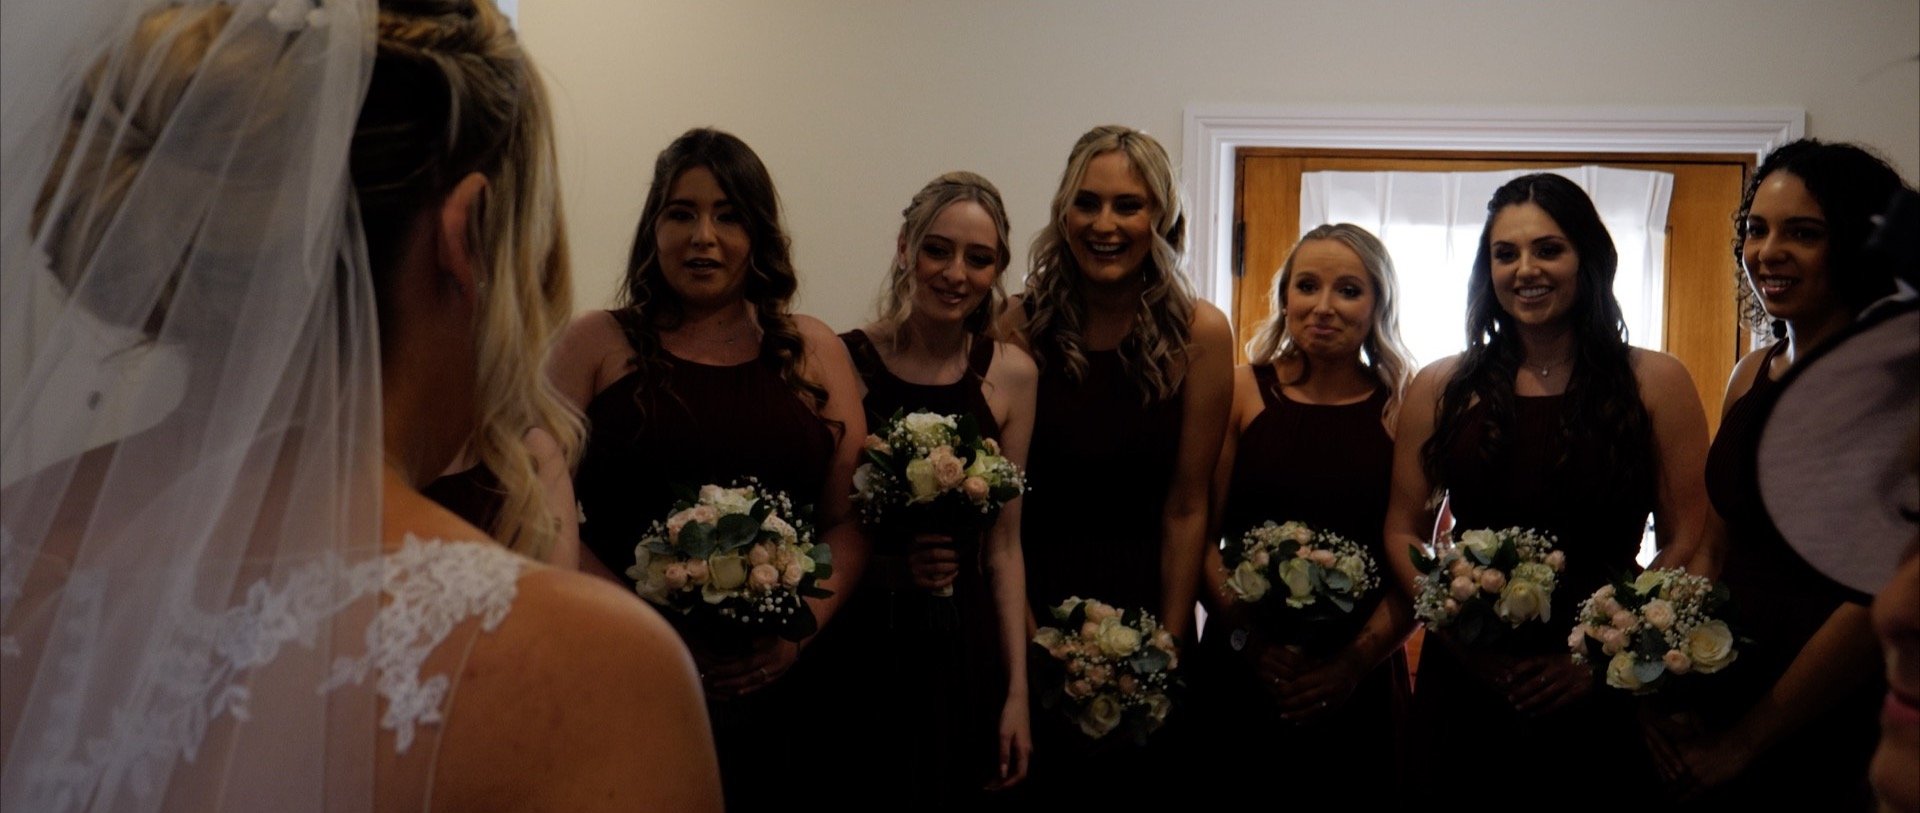 Wedding dress reactions video Essex.jpg